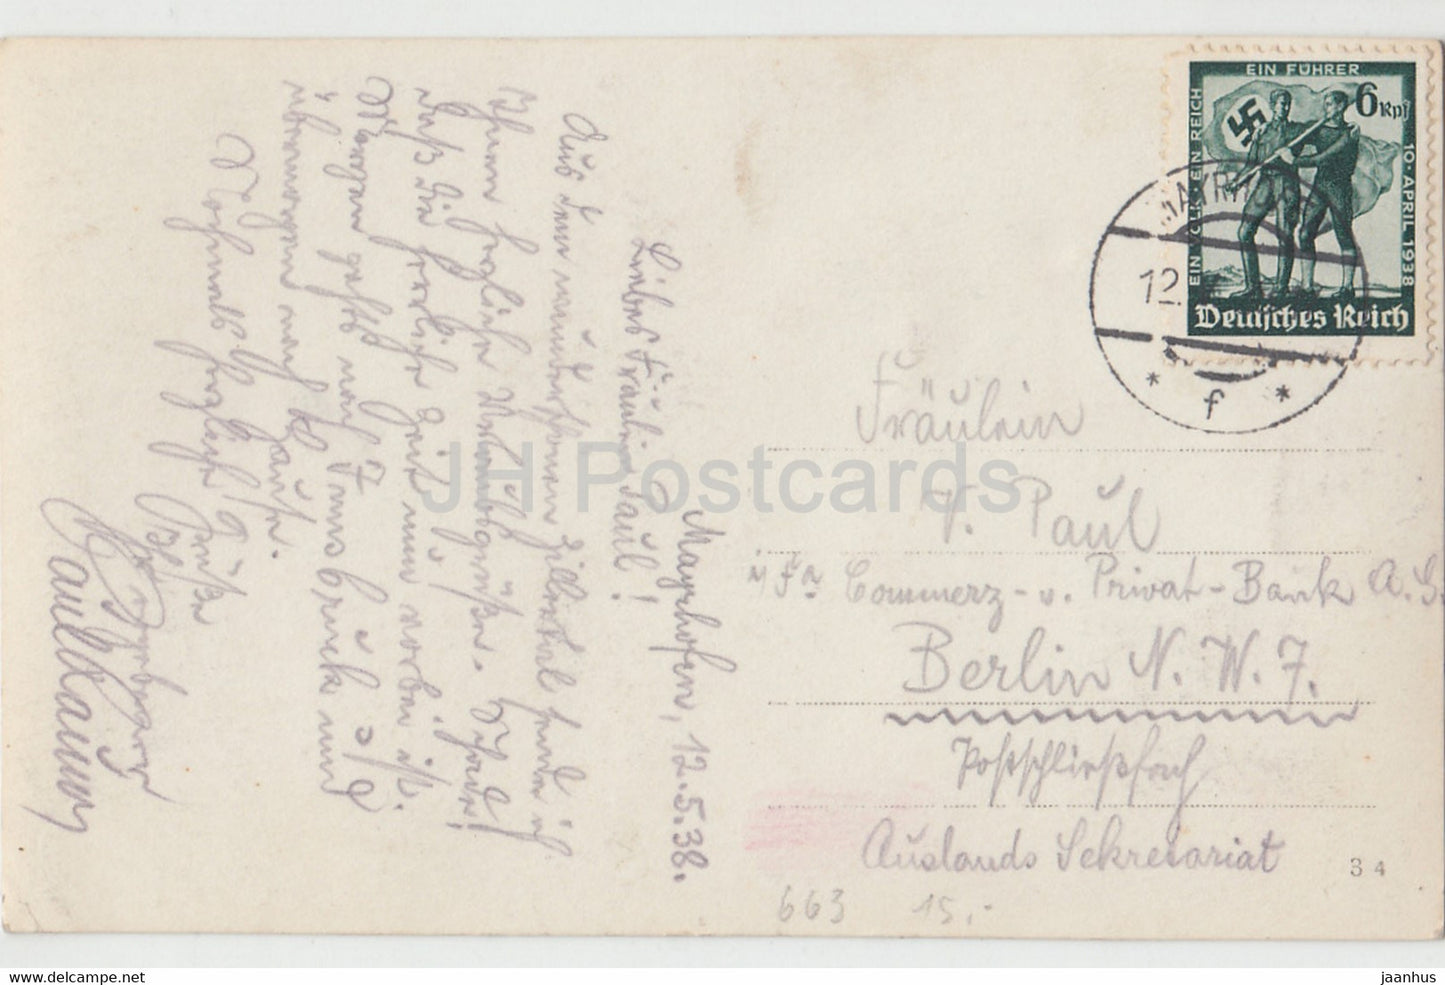 Mayrhofen 640 m - Zillertal - old postcard - 1938 - Austria - used